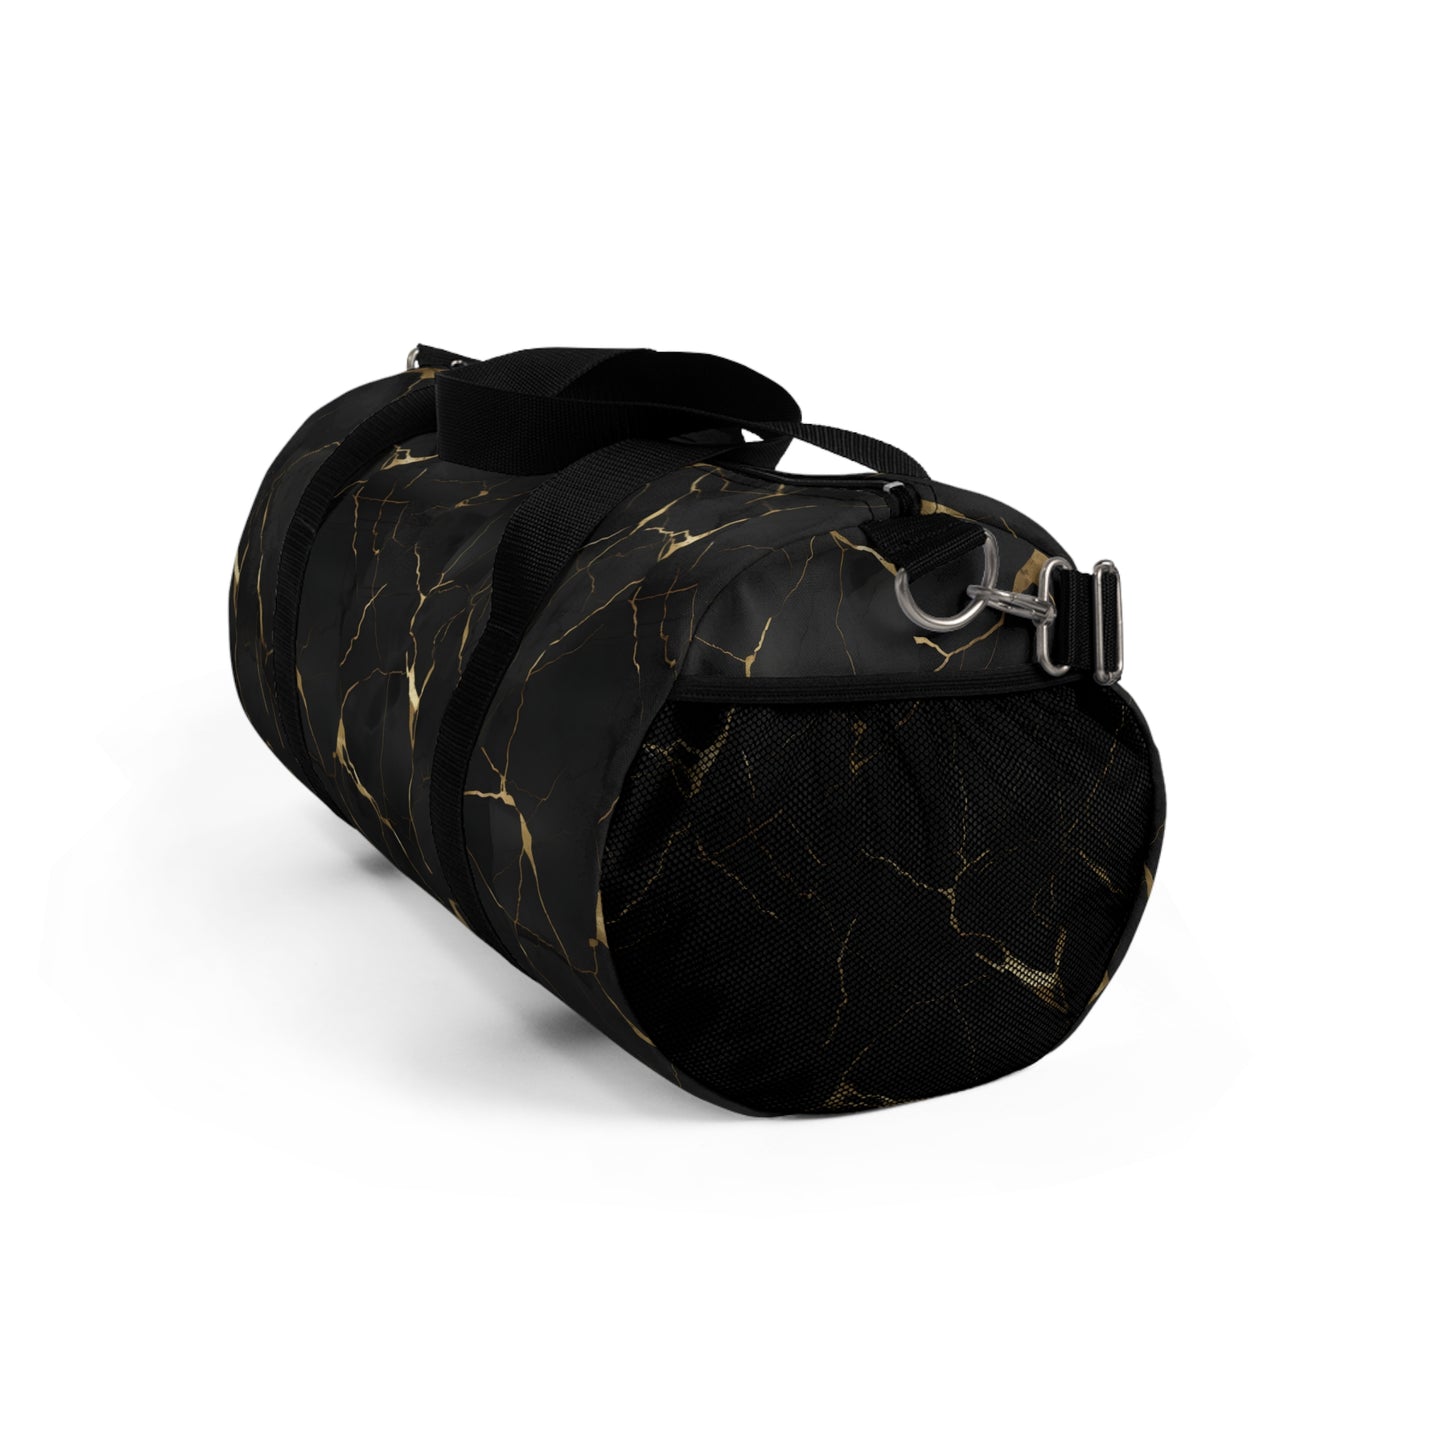 Black Marbled Duffel Bag